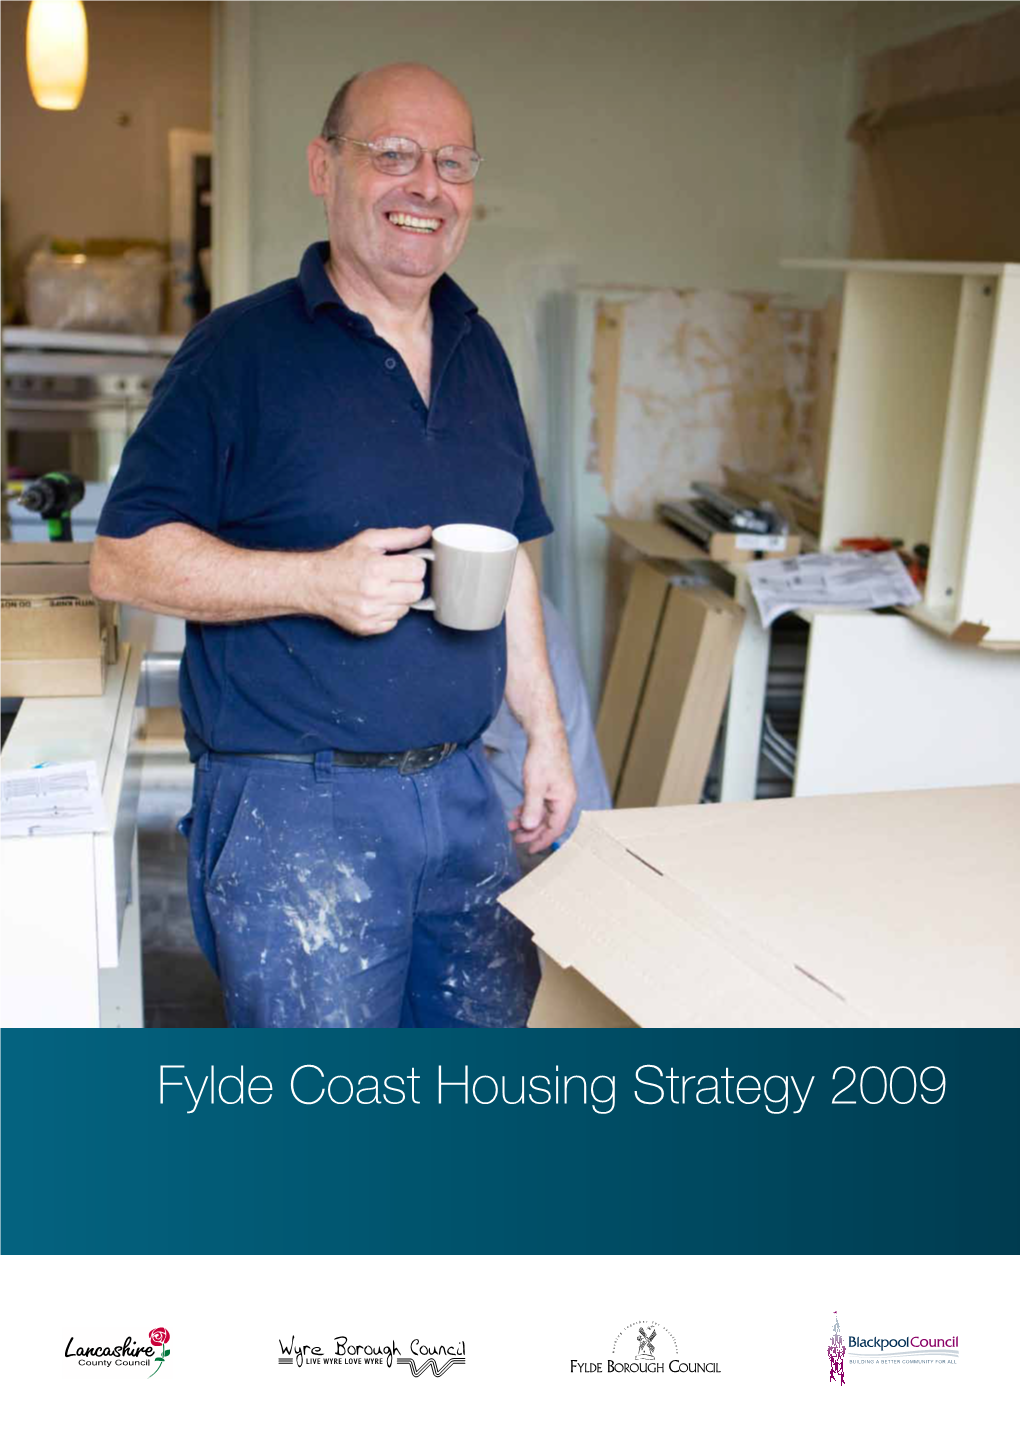 Fylde Coast Housing Strategy 2009